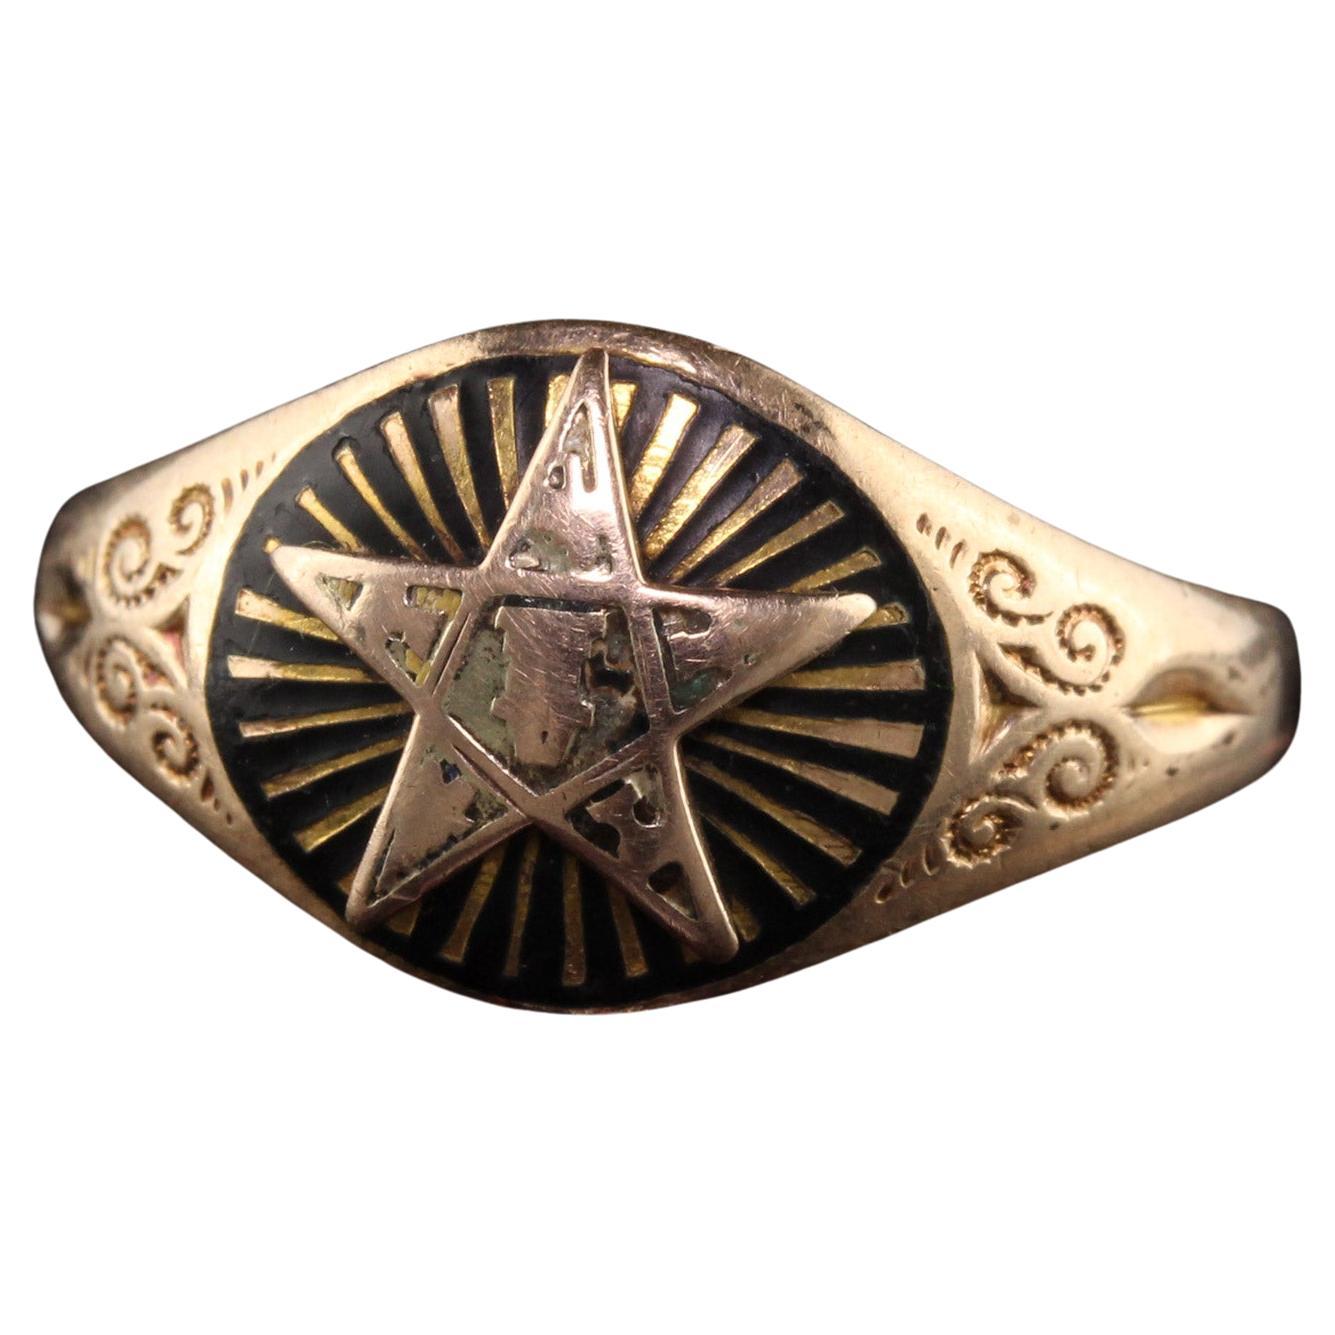 Antique Art Deco 10K Yellow Gold Masonic Black Enamel Ring